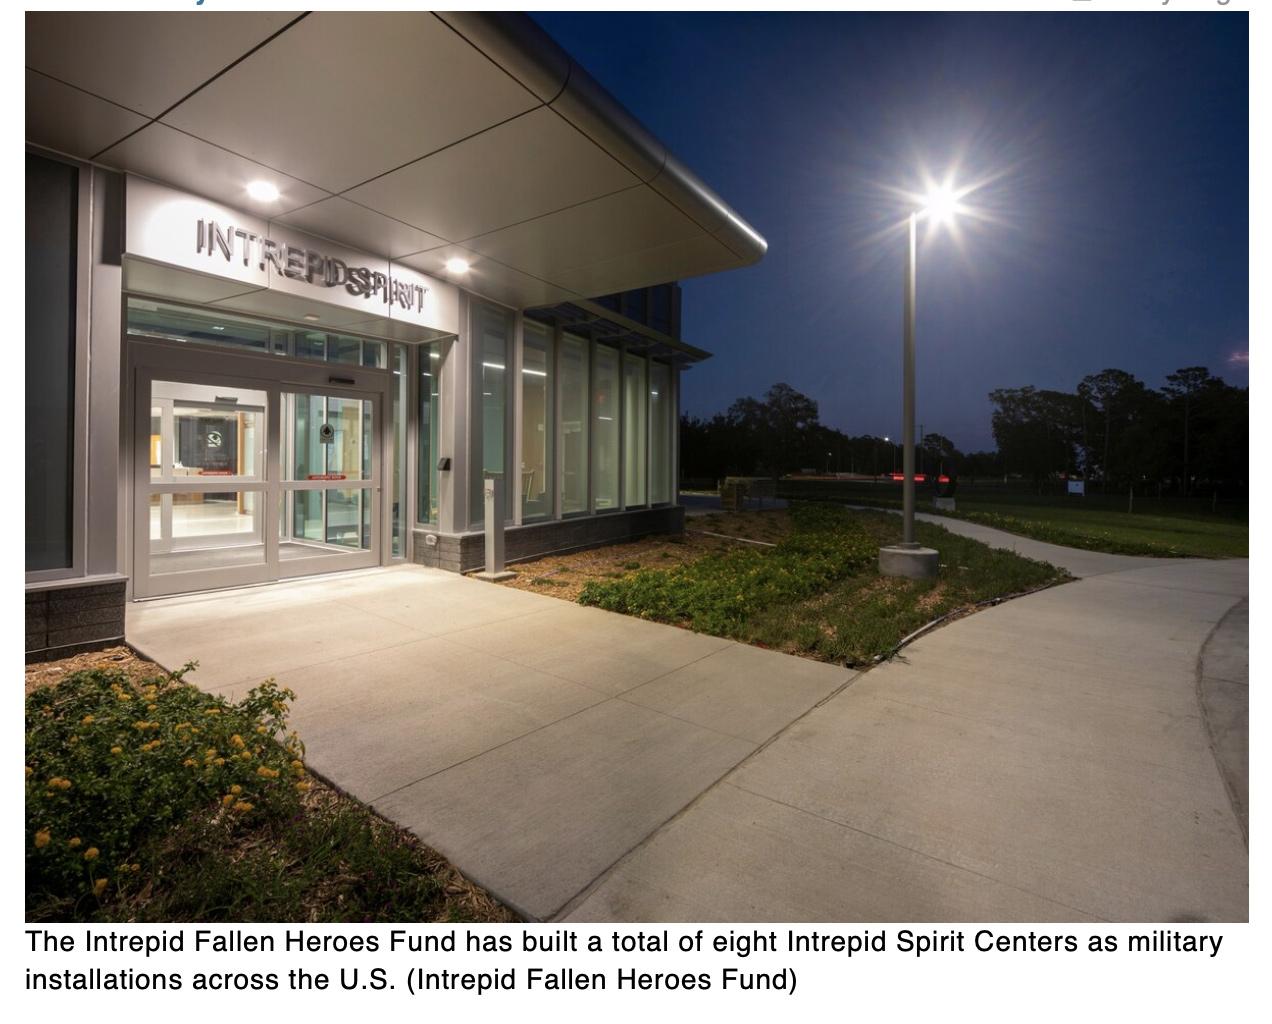  New facility to treat TBI, PTSD opens at Eglin Air Force Base